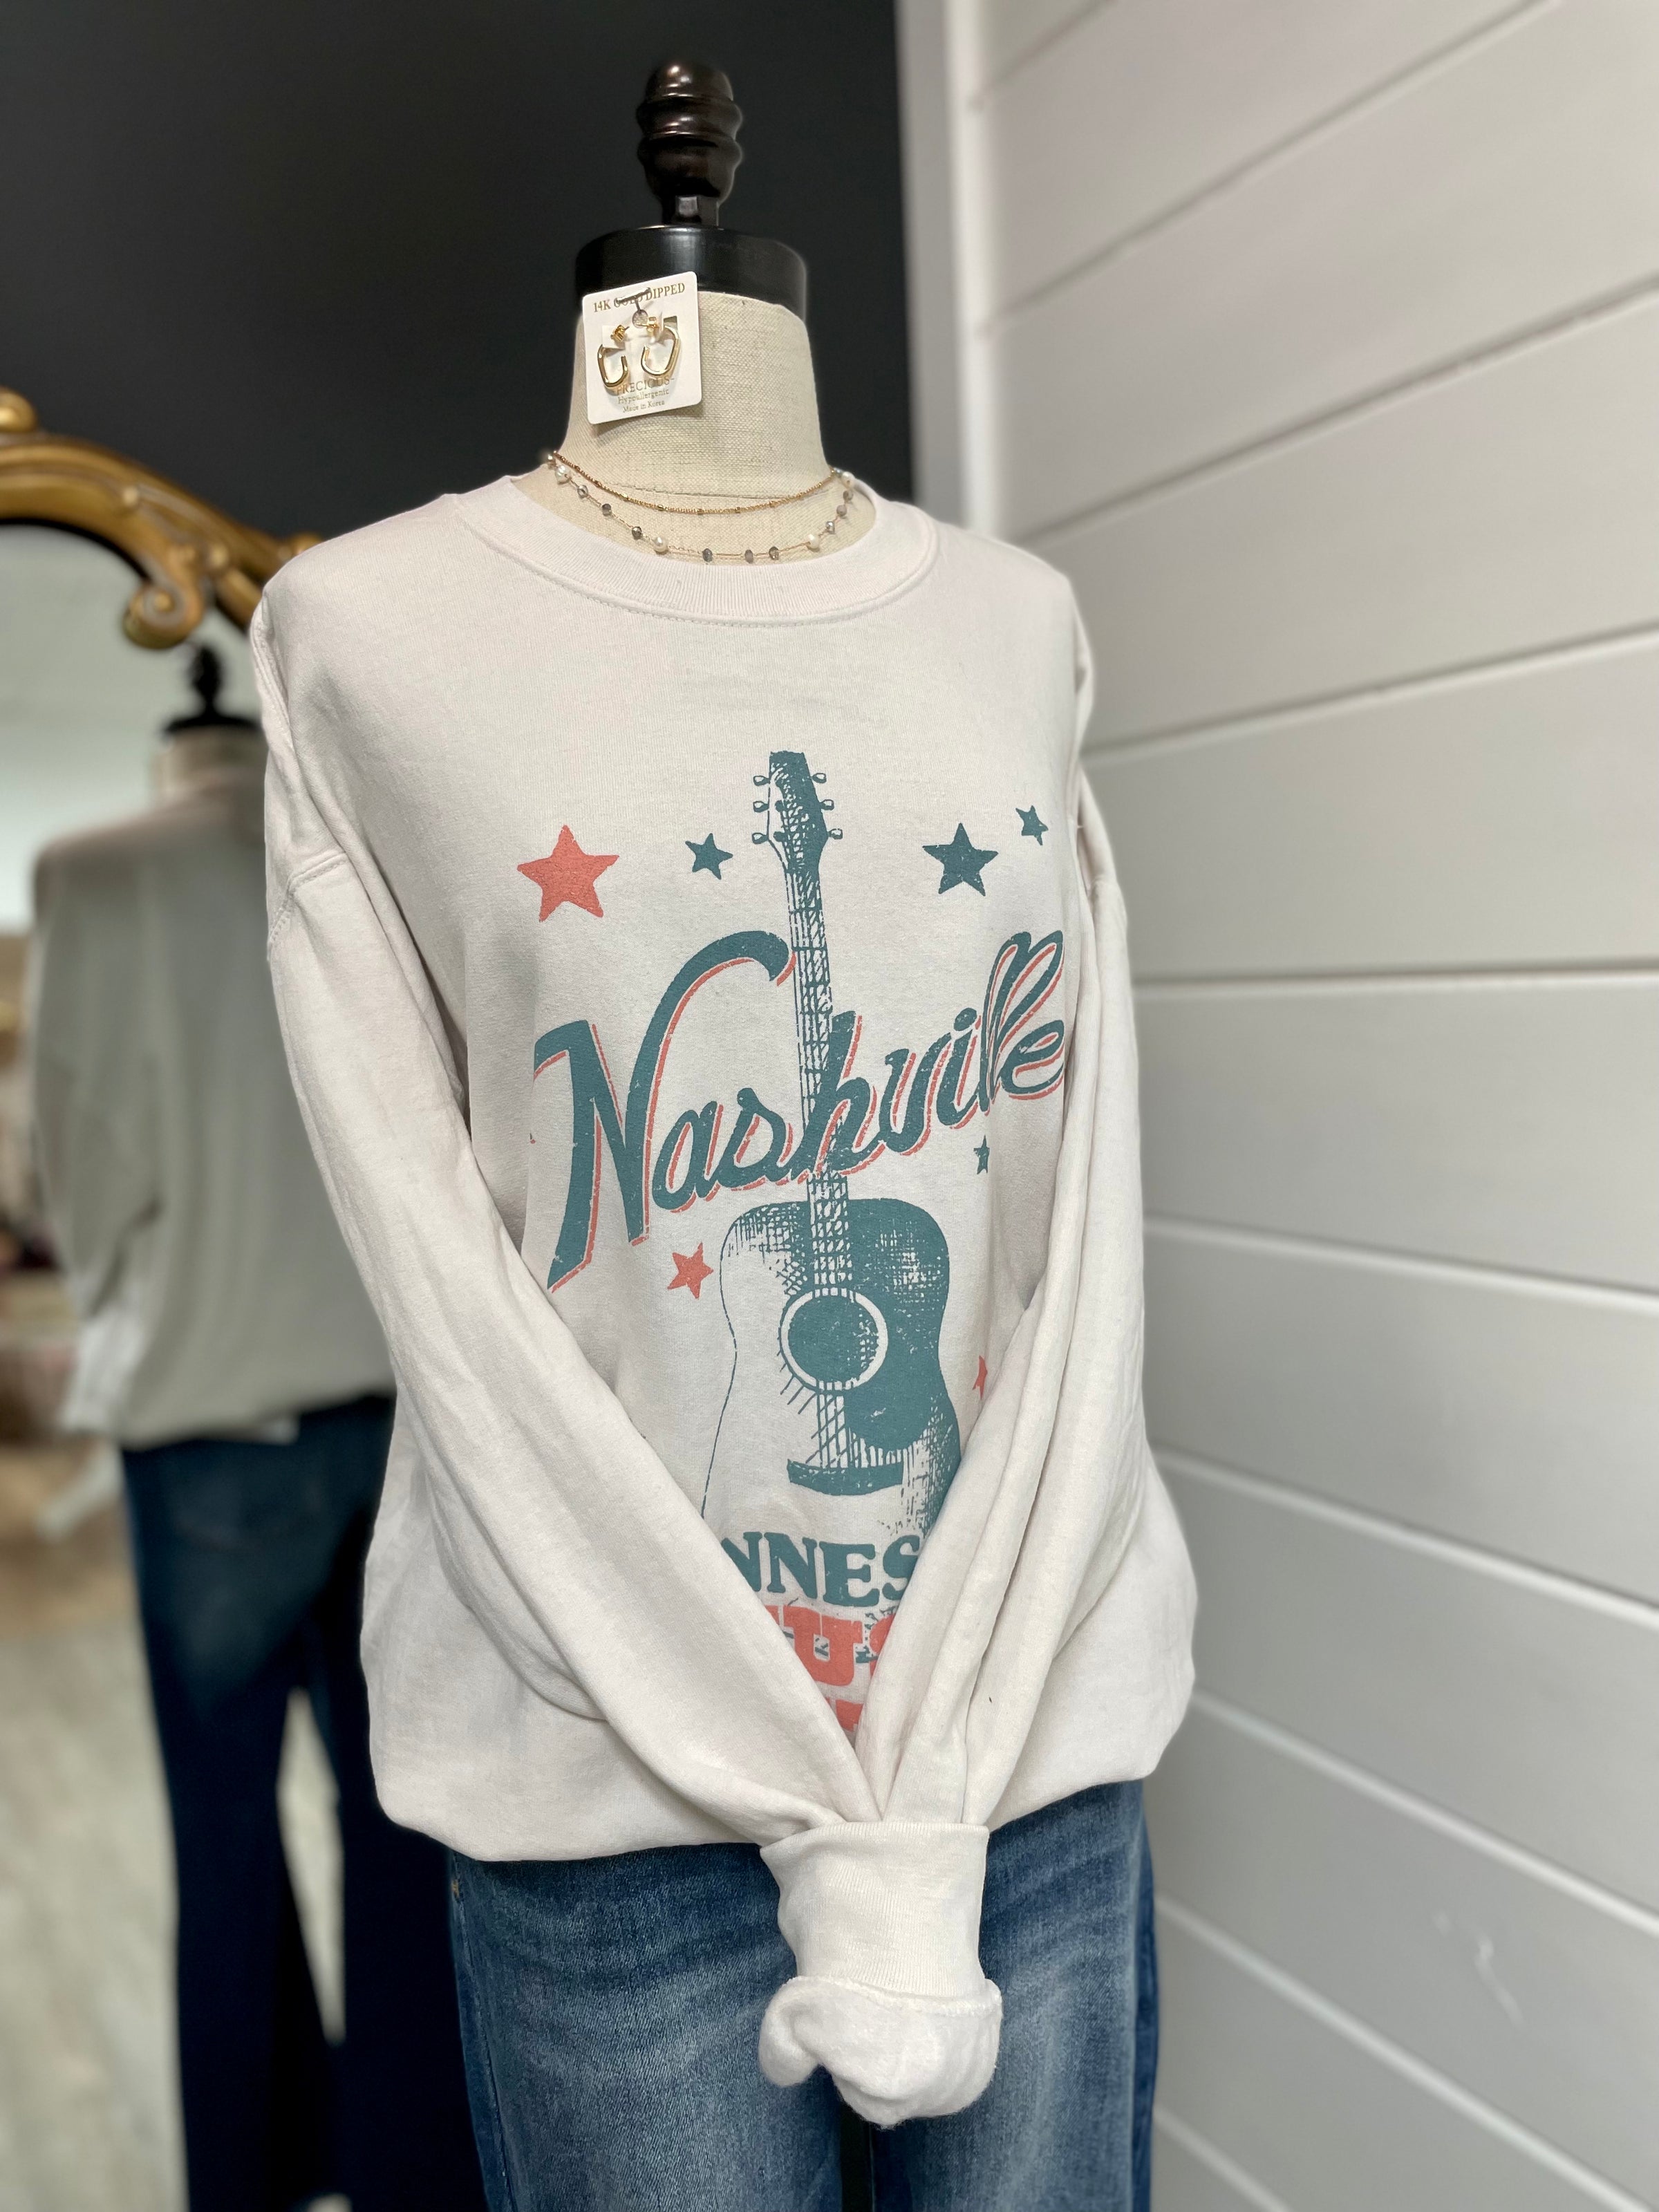 Vintage-Inspired Nashville Oversized Graphic Sweatshirt